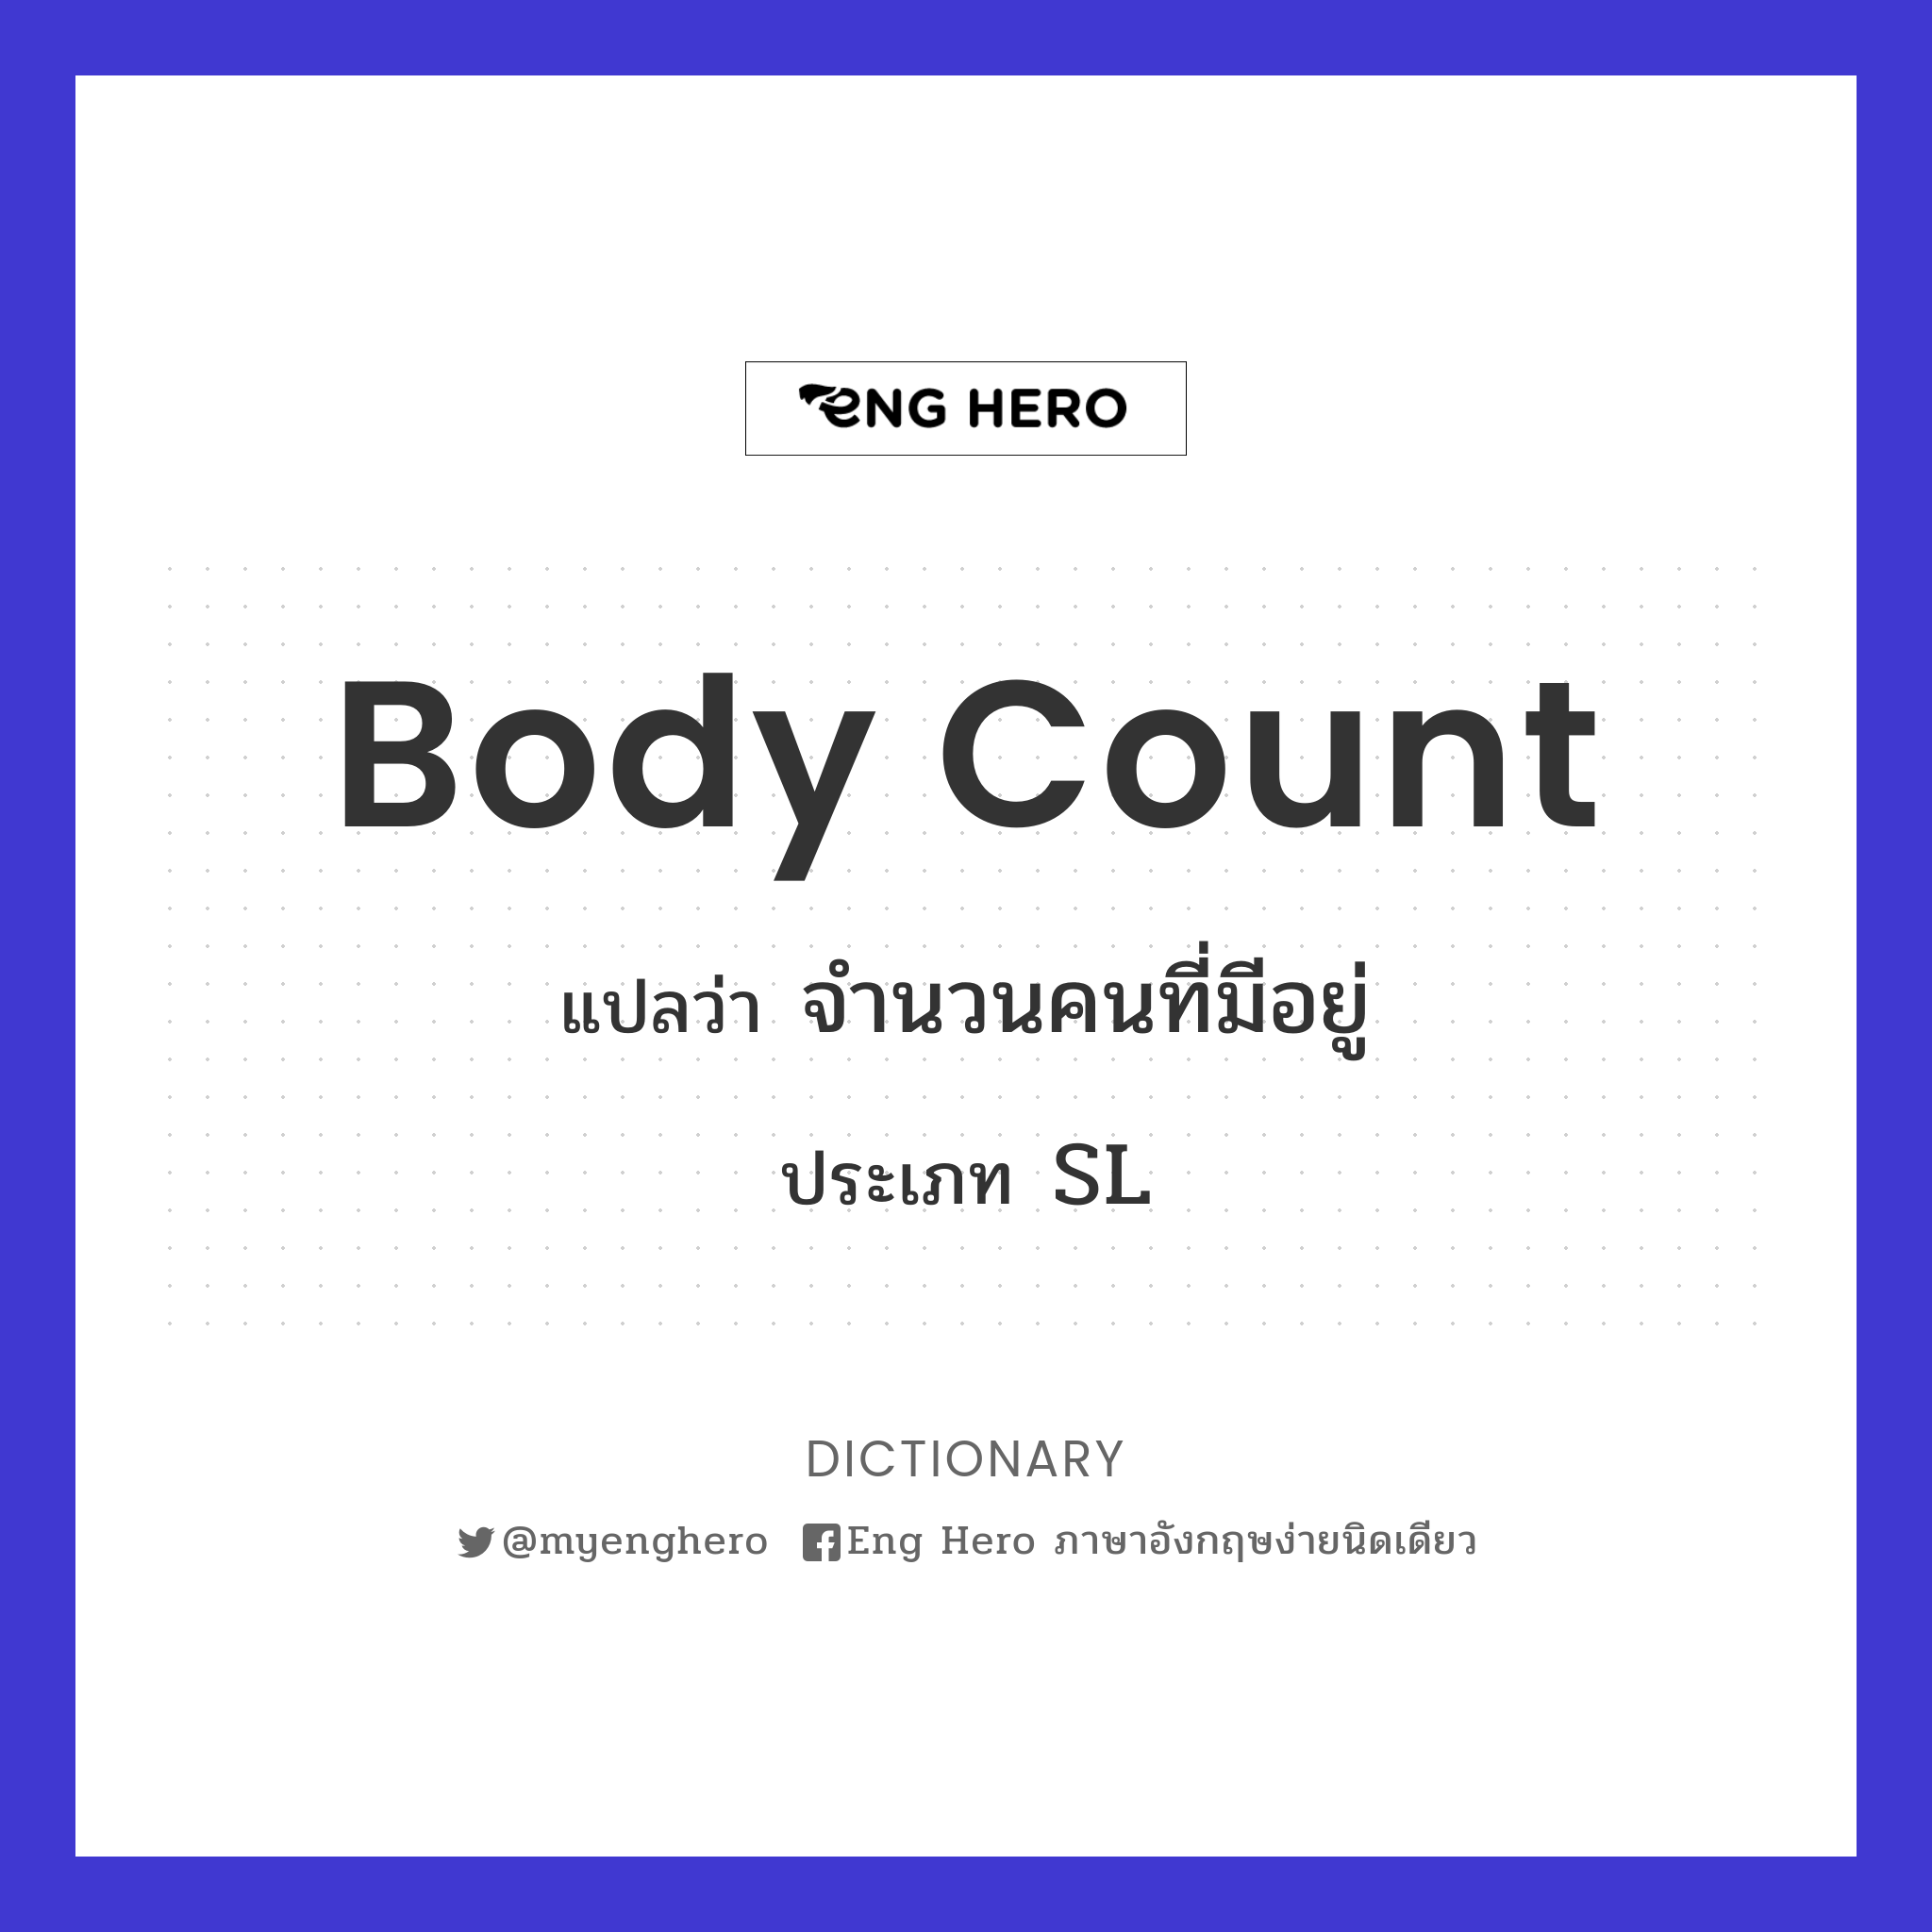 body count